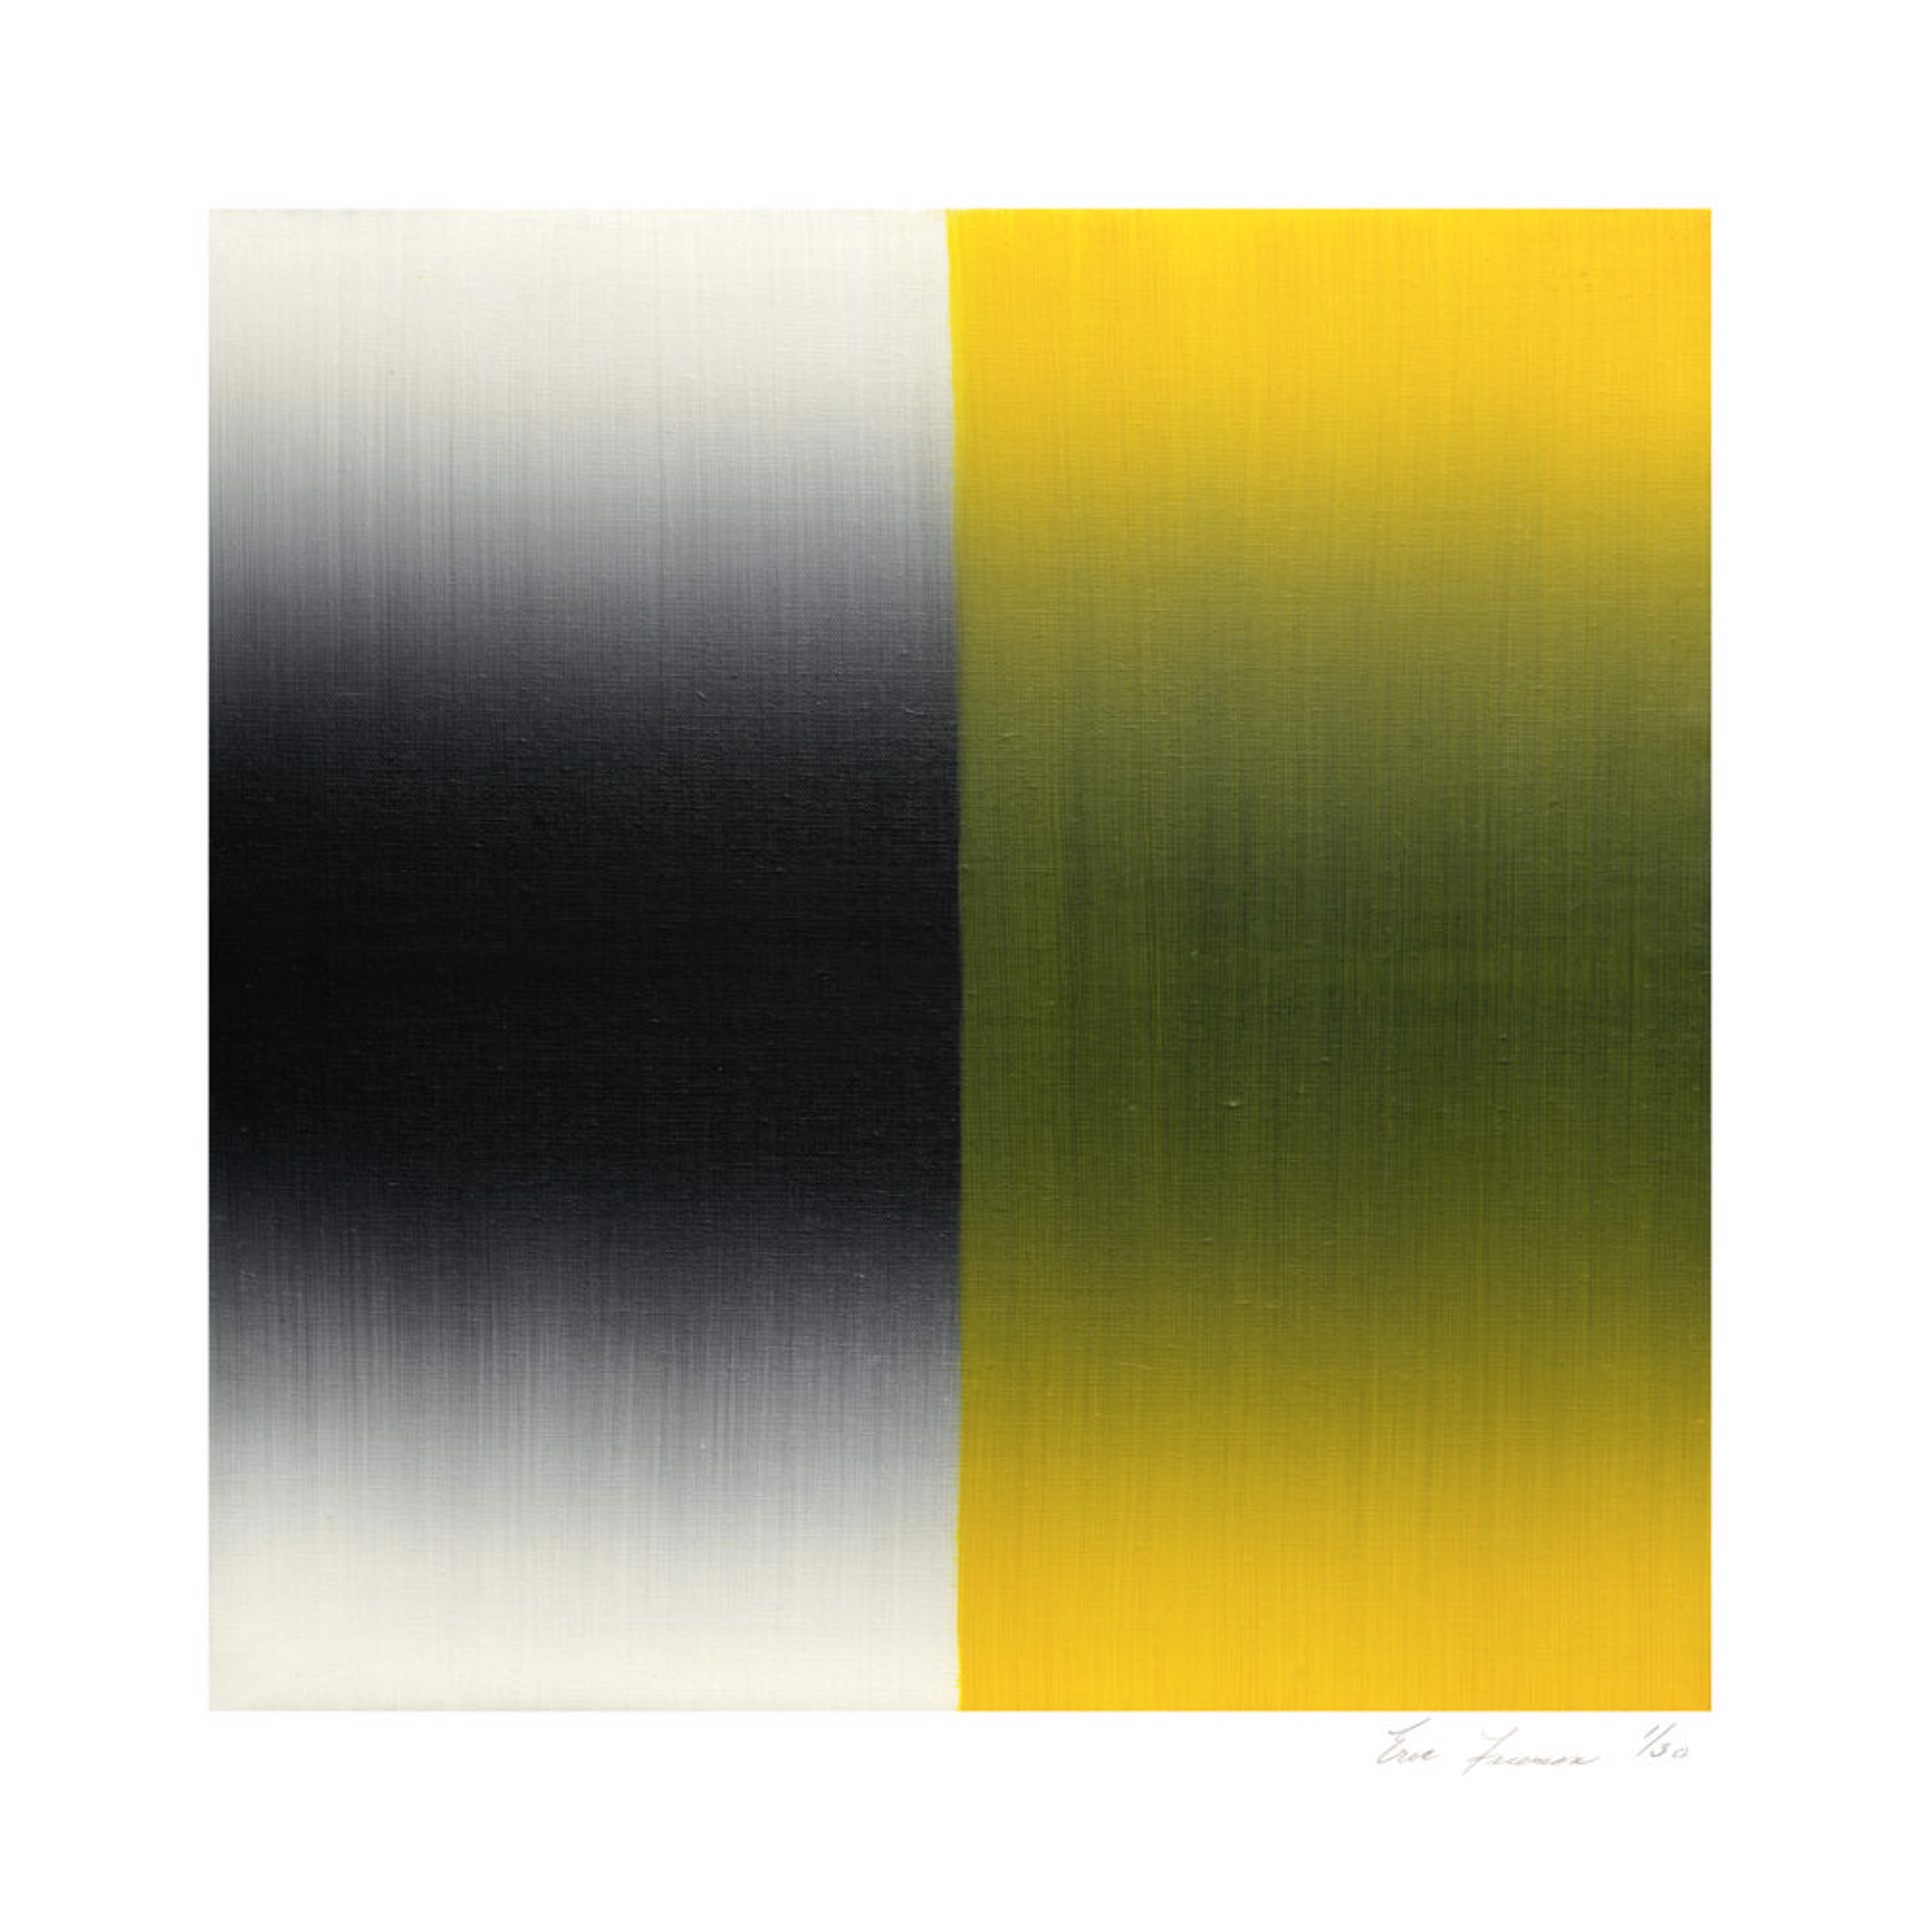 Shift (Yellow) by Eric Freeman